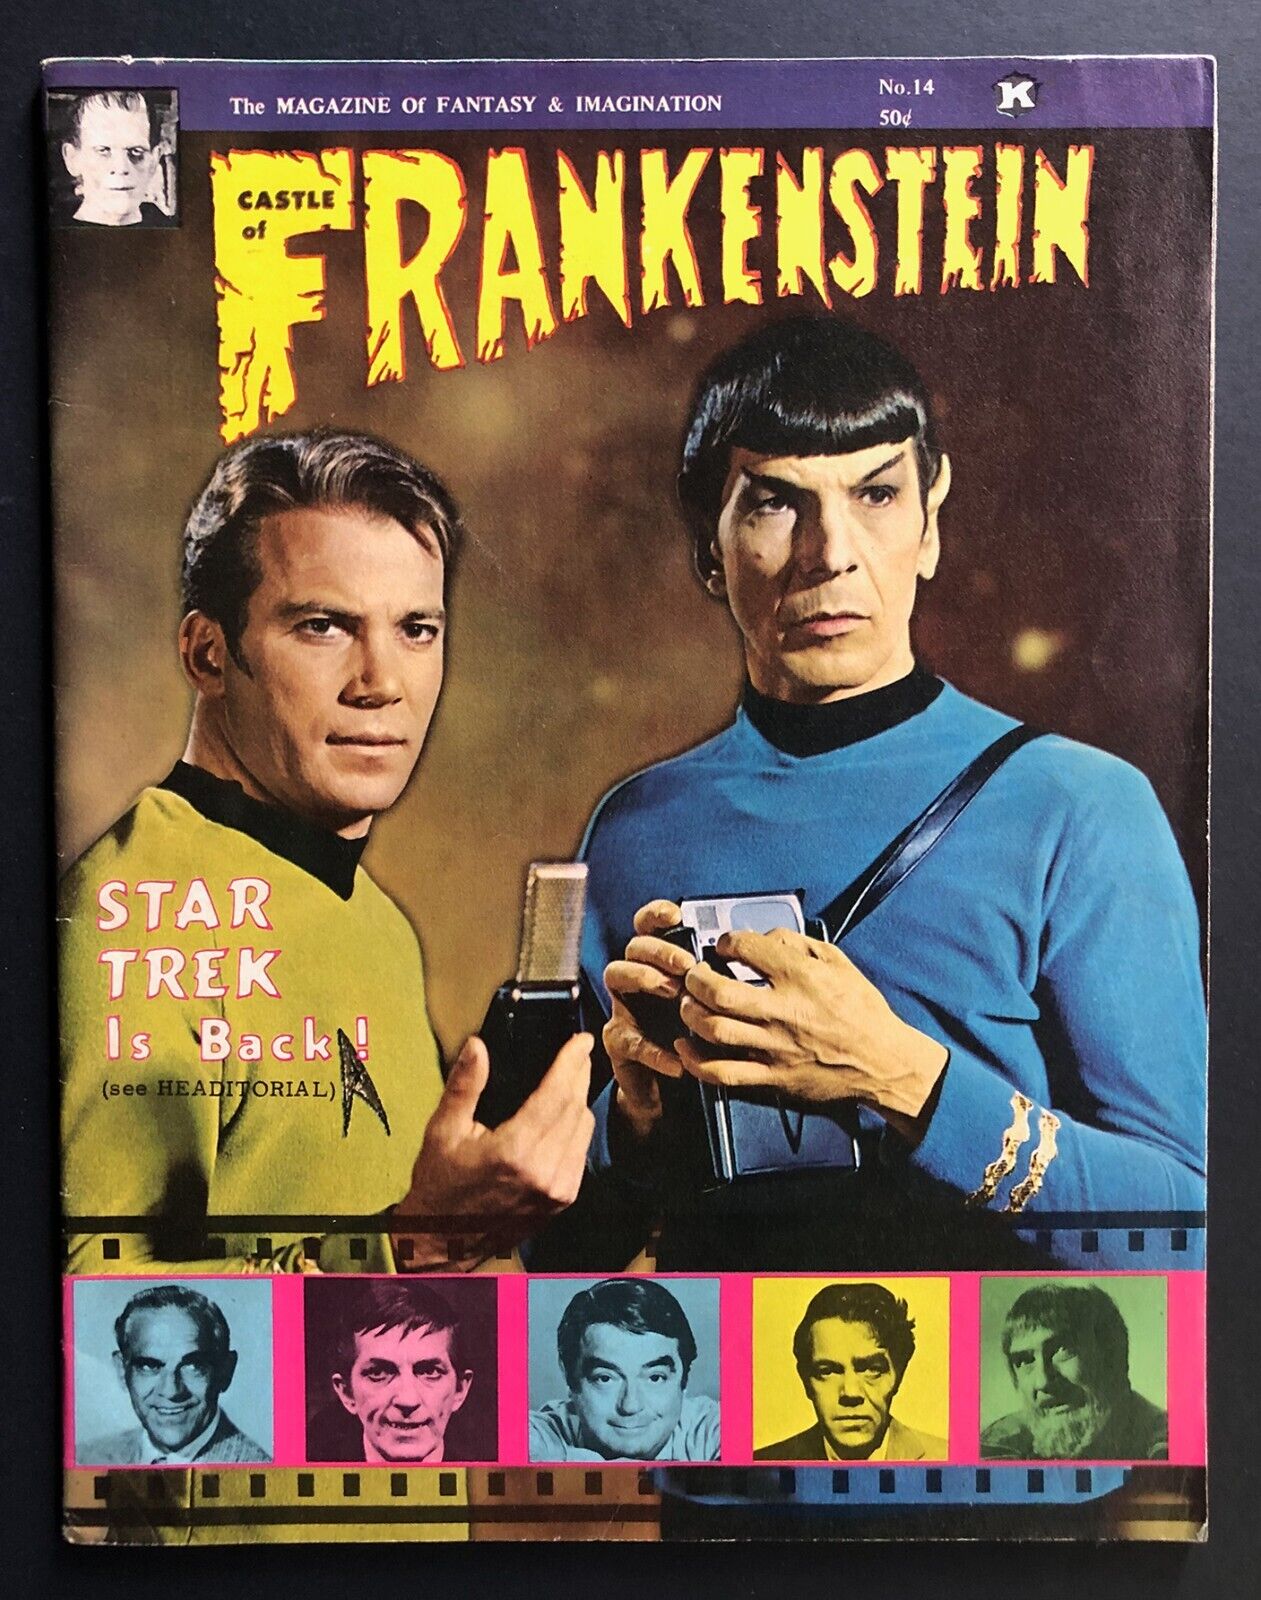 Castle of Frankenstein Magazine 14 1969 FN+ Star Trek Ray Bradbury Interview